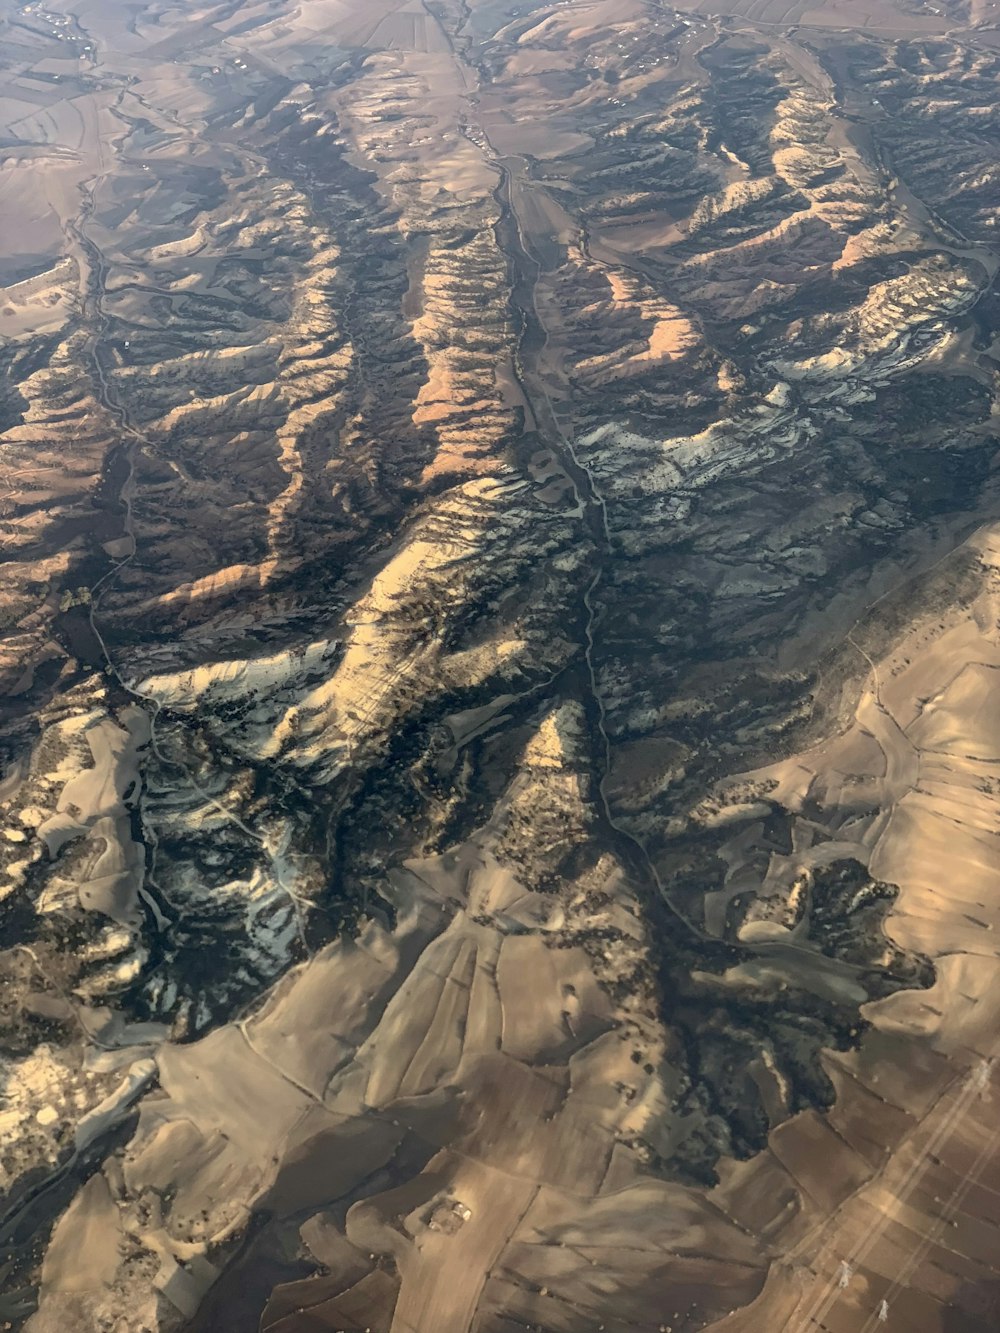 a high angle view of a canyon